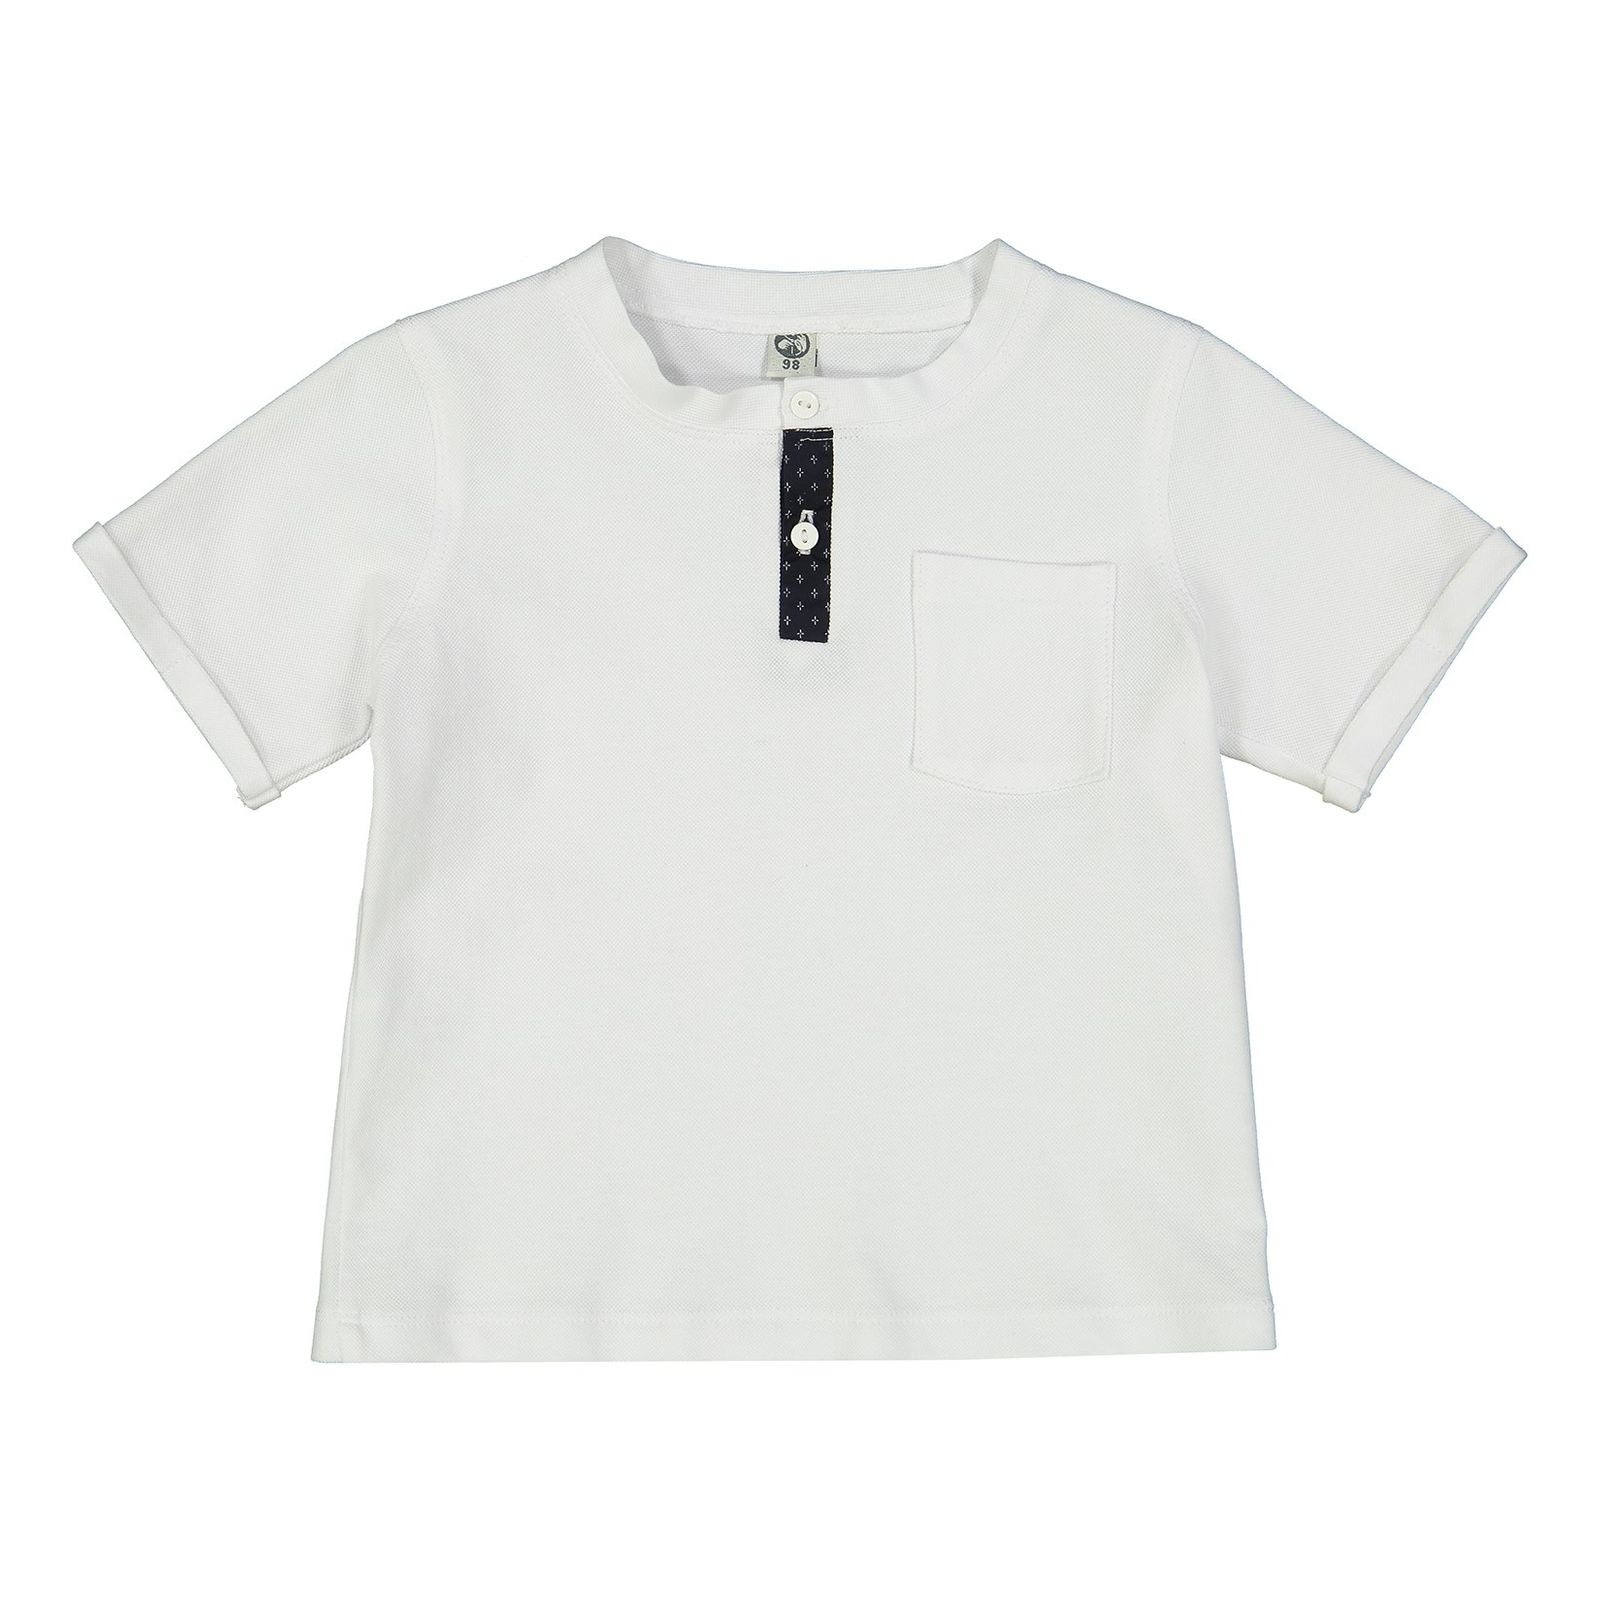 تی شرت نخی یقه گرد پسرانه آرش - دایان - سفید - 3